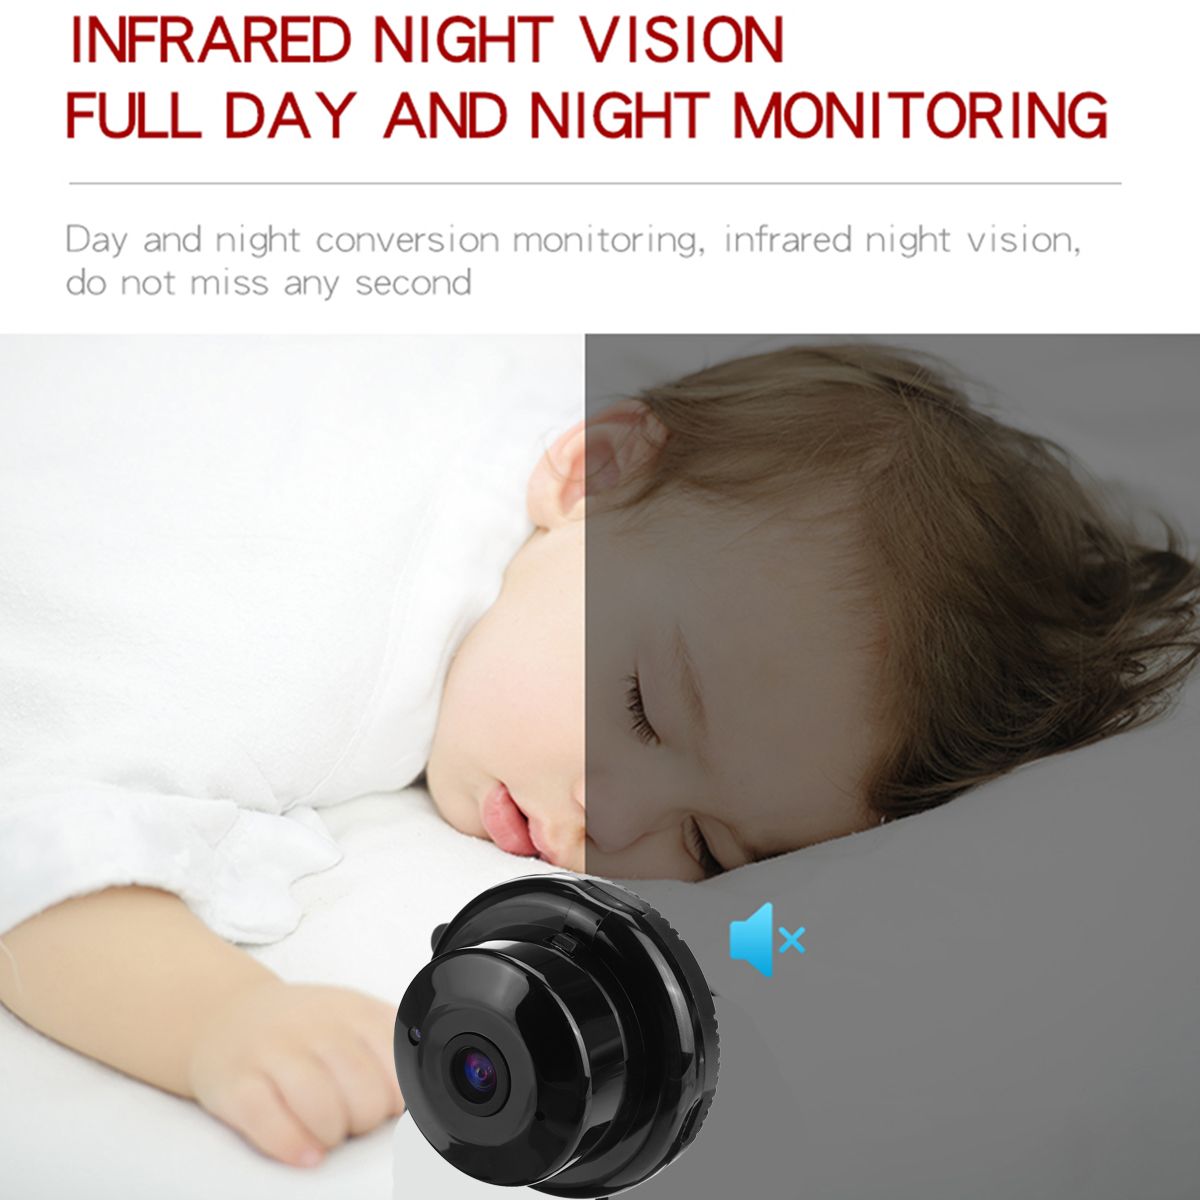 Smart-Camera-HD-1080p-Wide-Angle-Compact-Camera-Waterproof-Infrared-Night-Vision-Wireless-Network-Mo-1752722